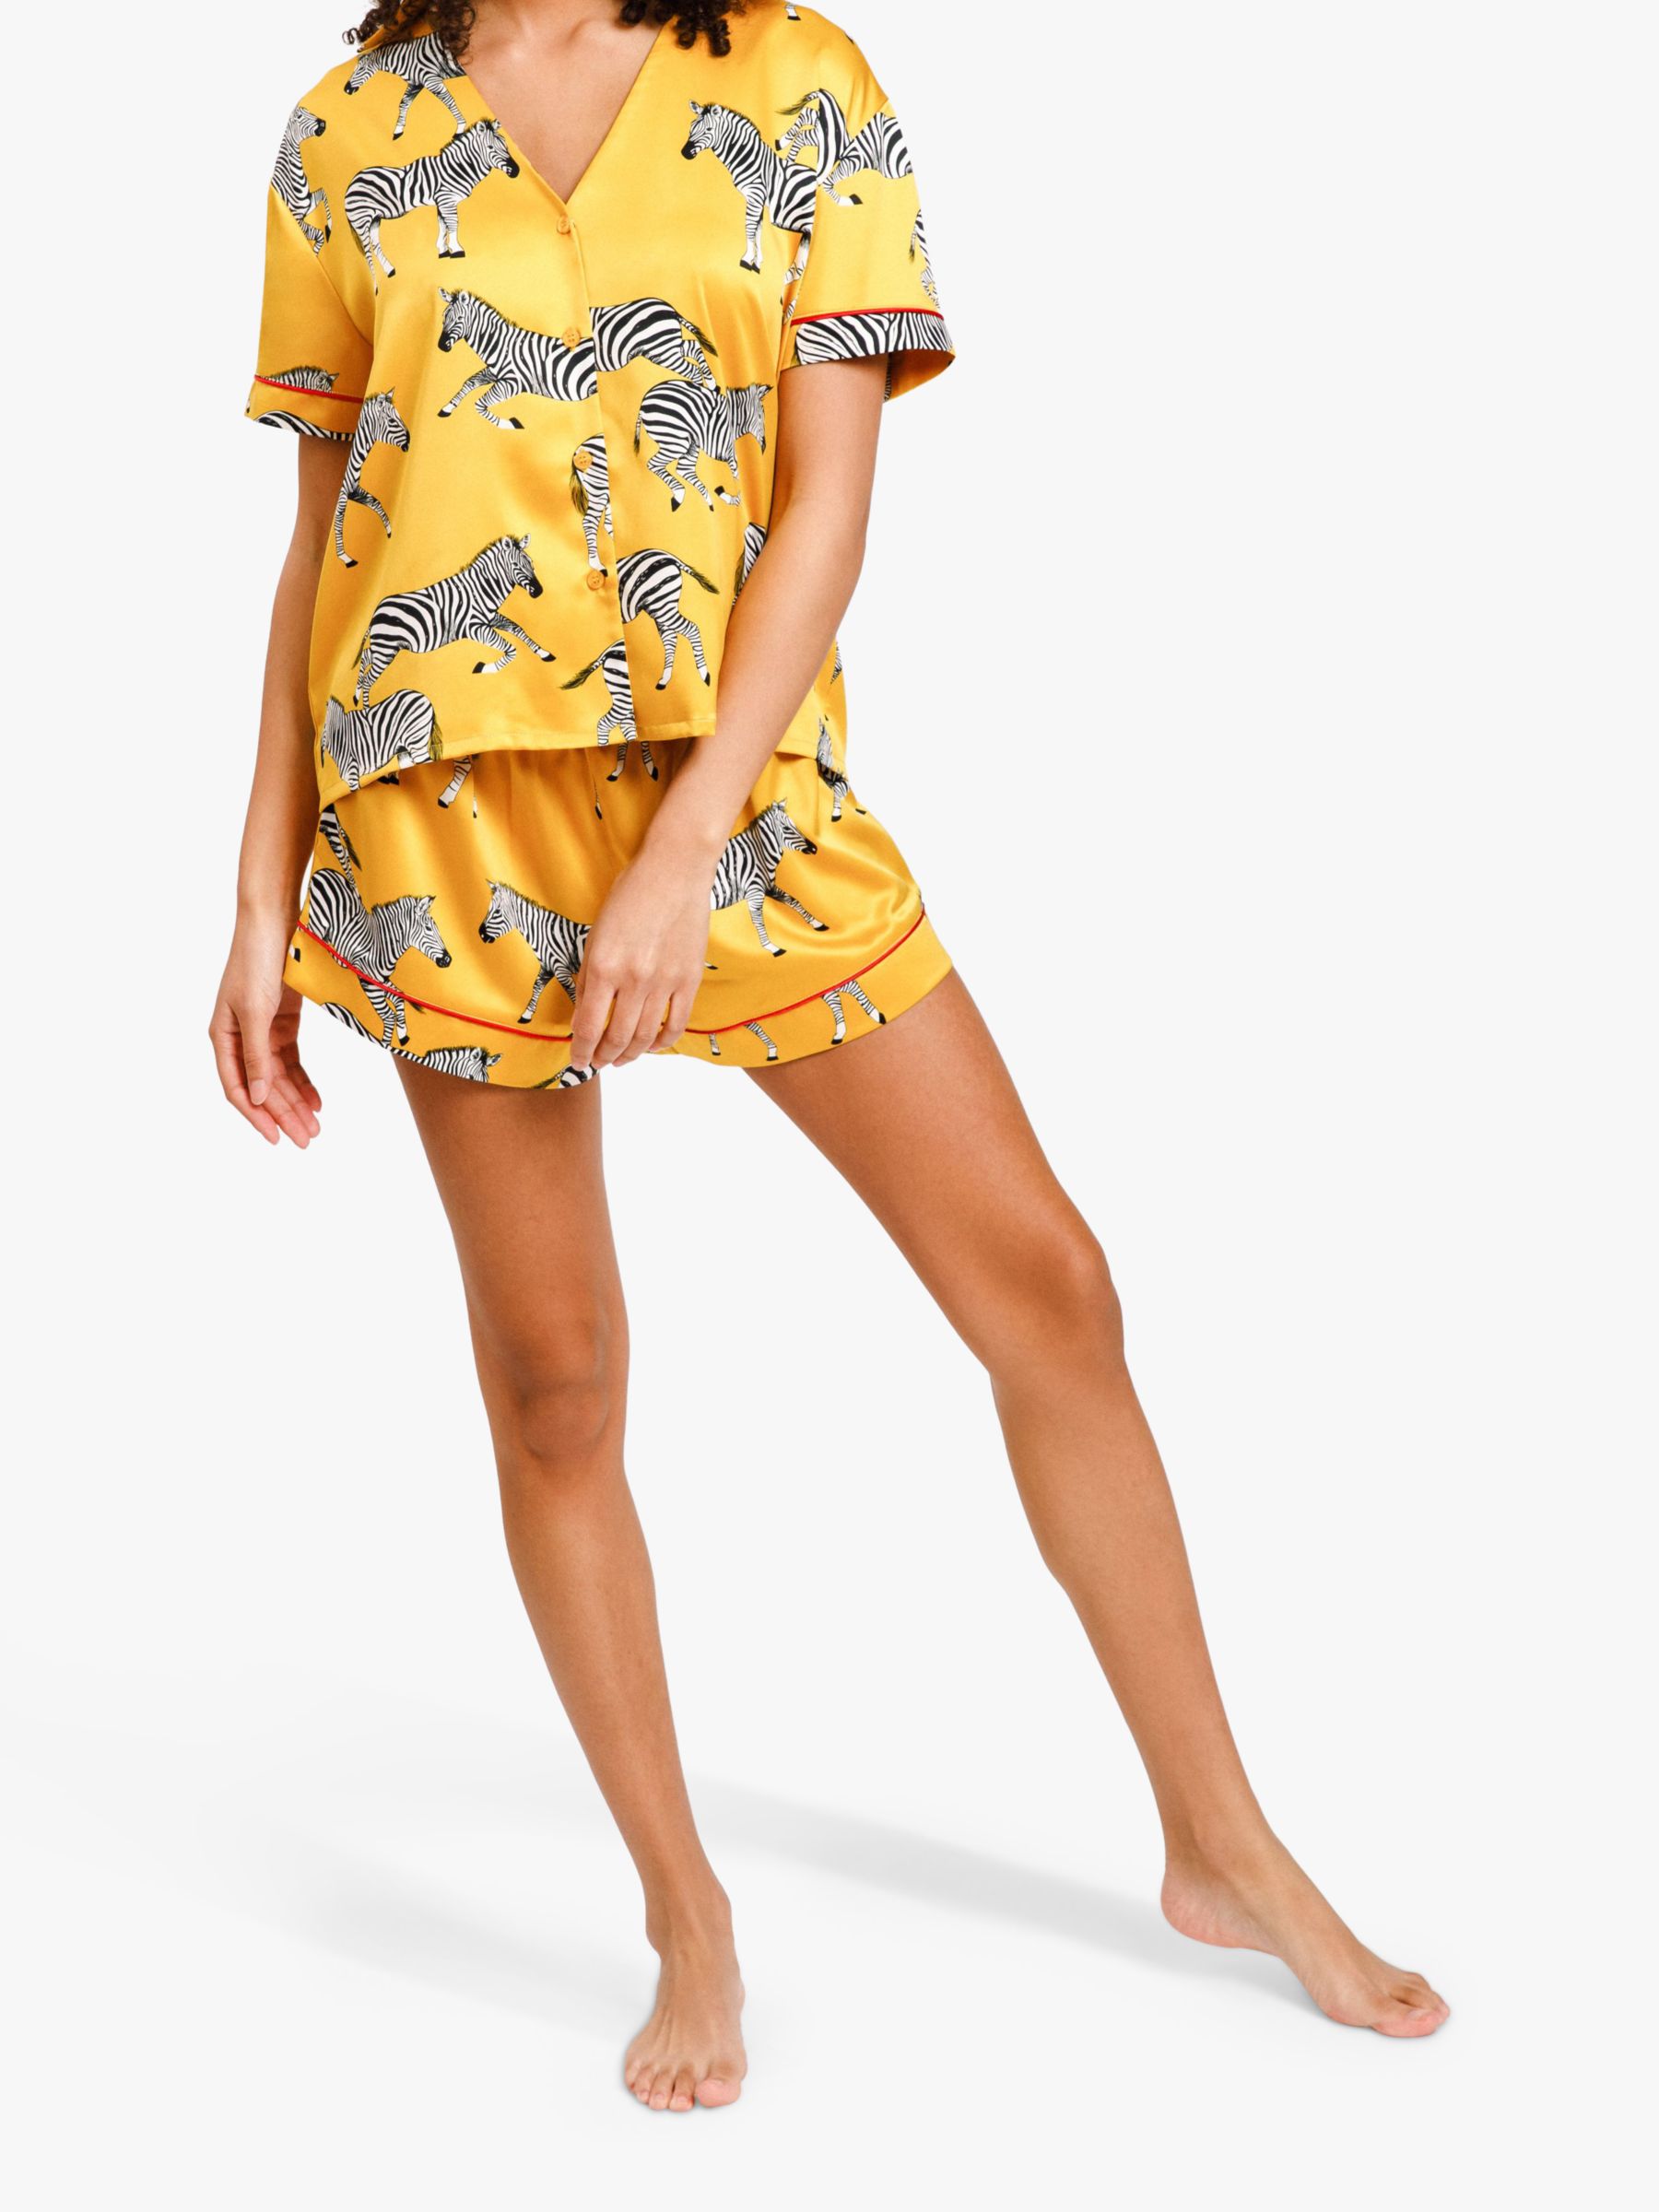 Buy Chelsea Peers Zebra Print Satin Short Pyjama Set Online at johnlewis.com